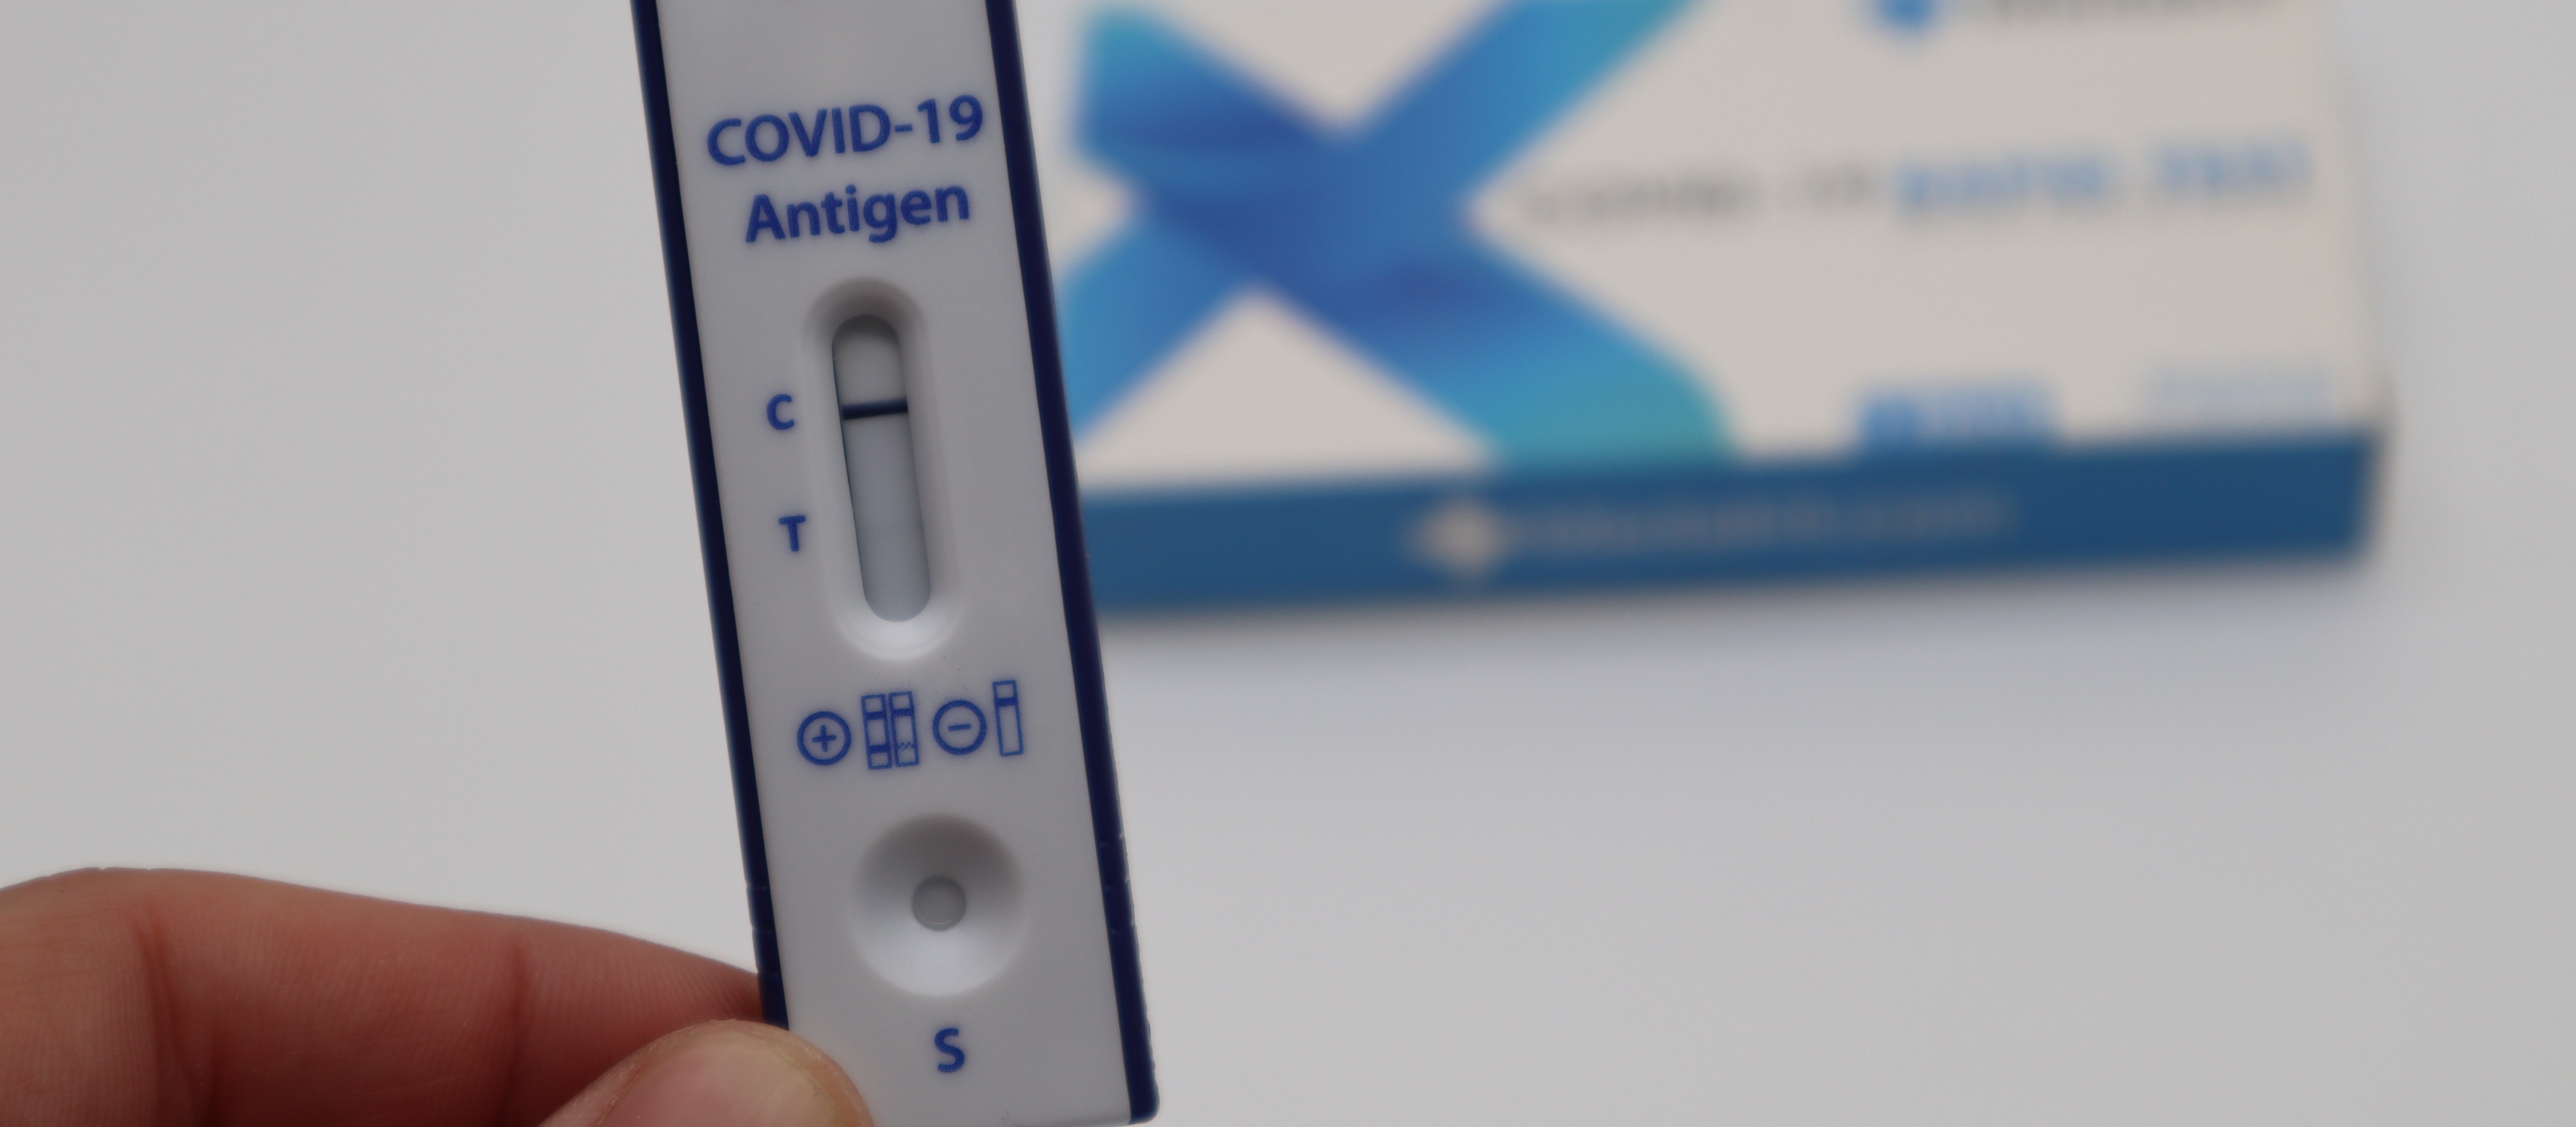 Antigen testing kit CREDIT [Image: Medakit Ltd on Unsplash]